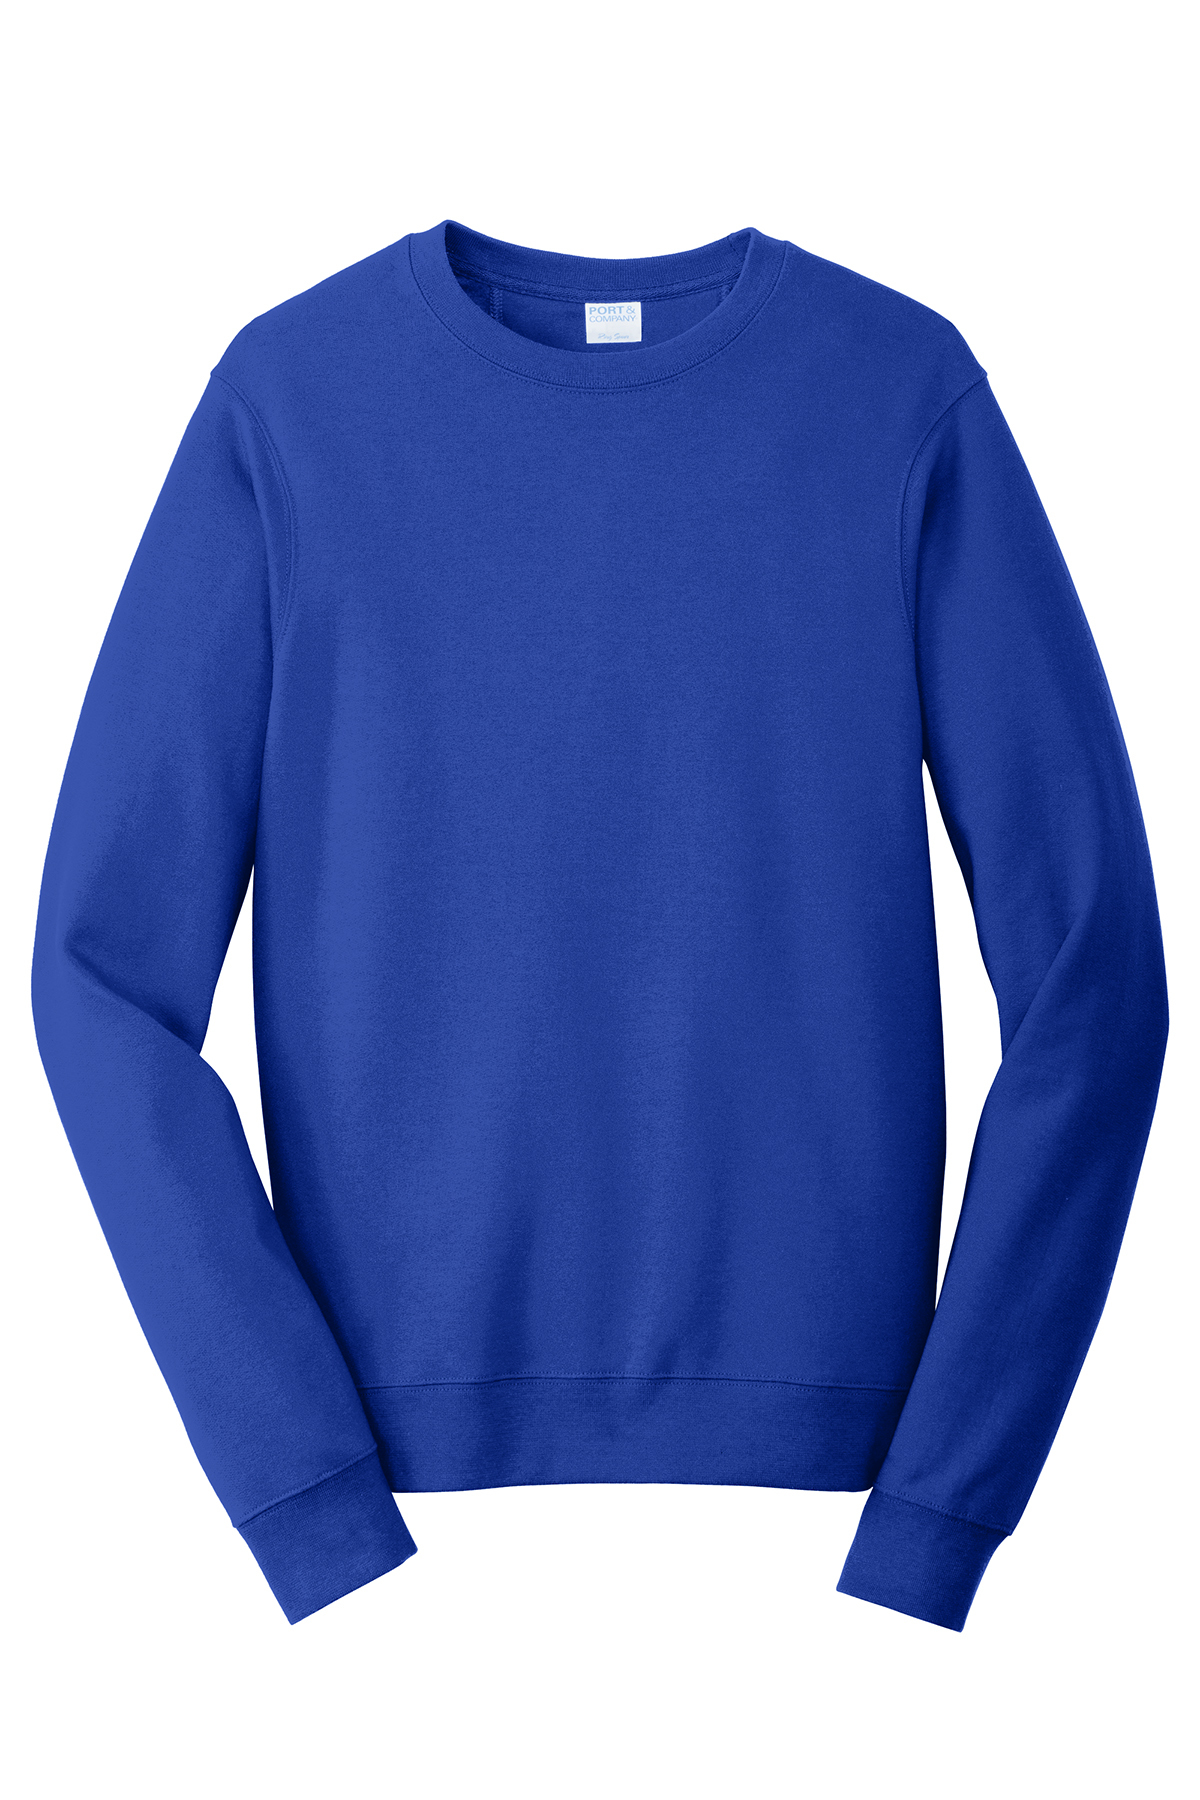 Port & Company ® Fan Favorite™ Fleece Crewneck Sweatshirt | Product ...